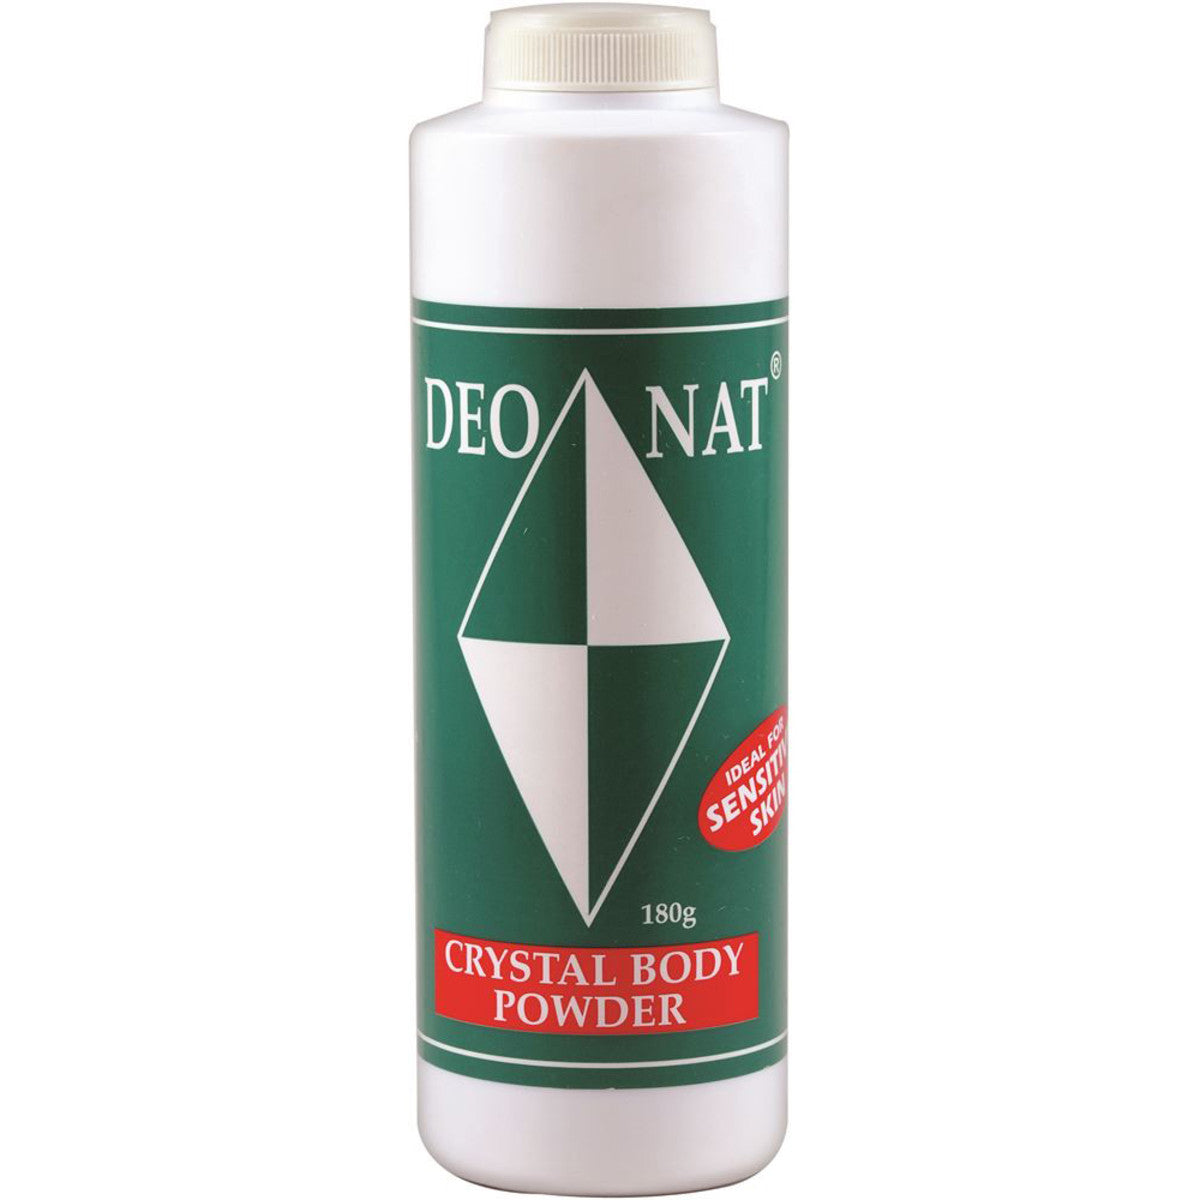 Deonat Crystal Body Powder 180g, Sensitive Skin